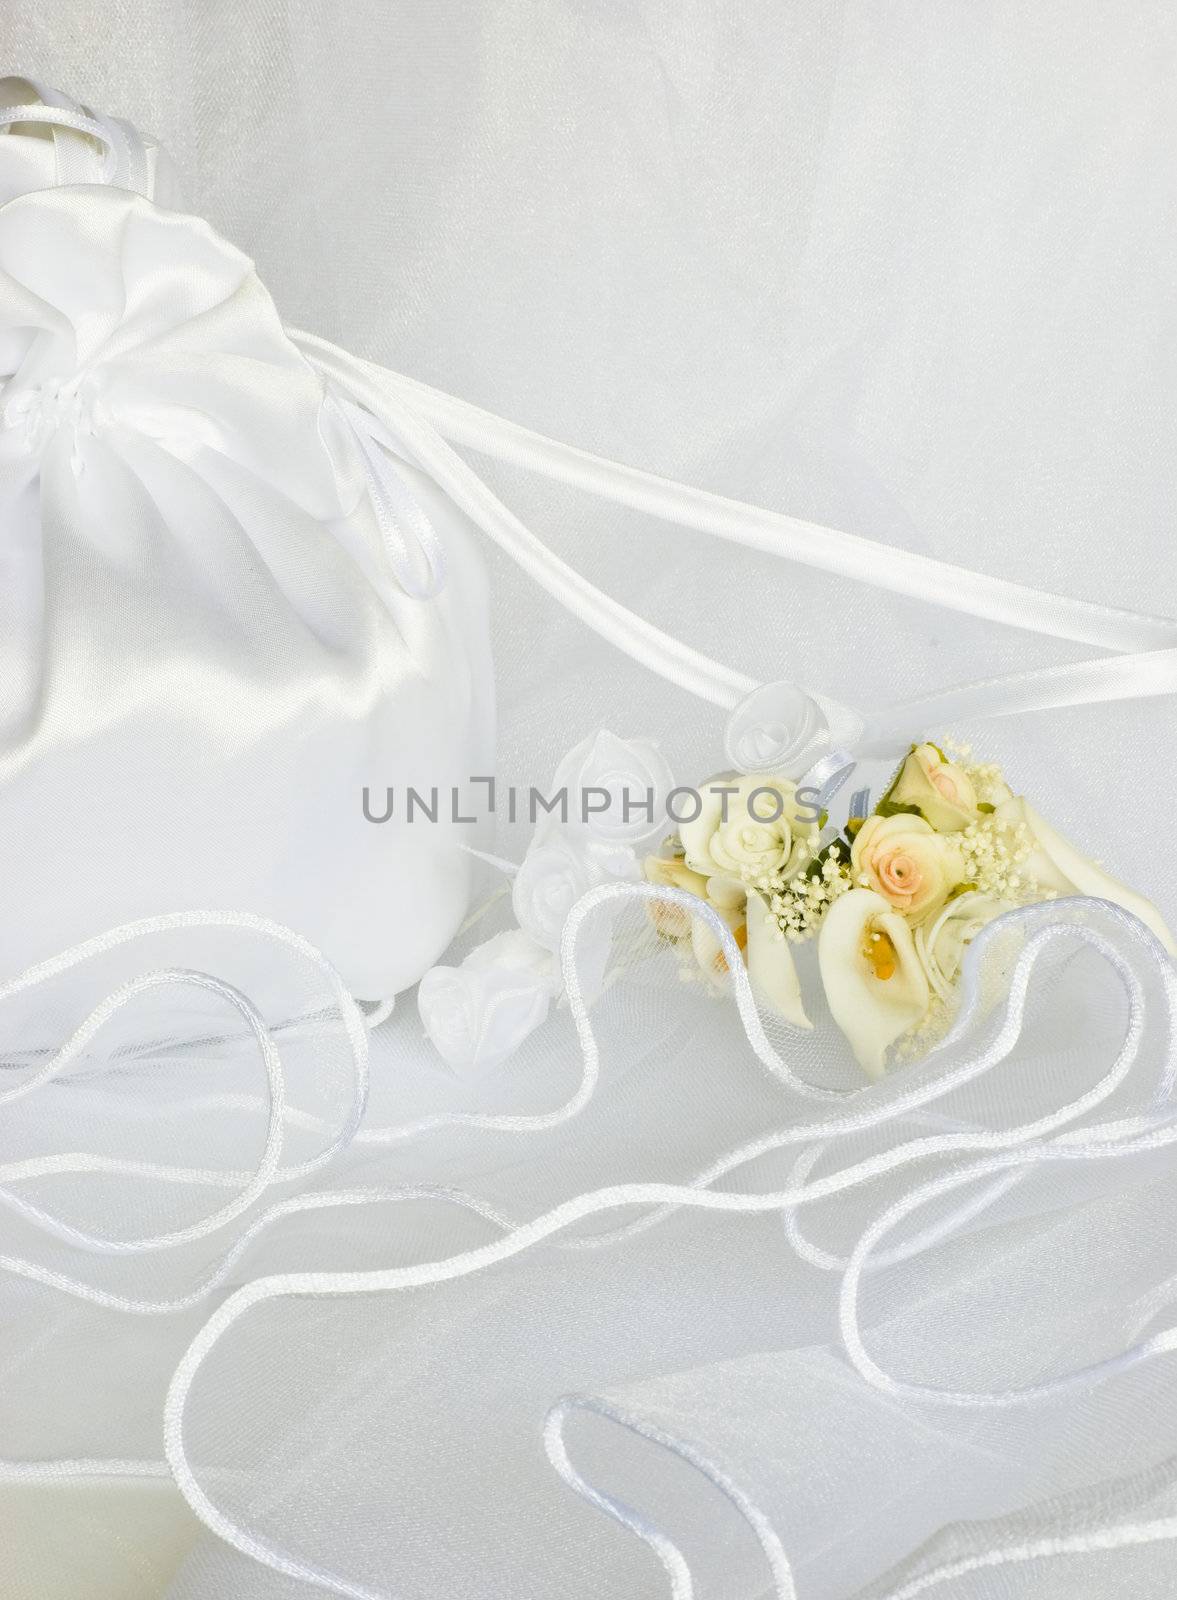 wedding flowers and bridal bag over veil by Dessie_bg